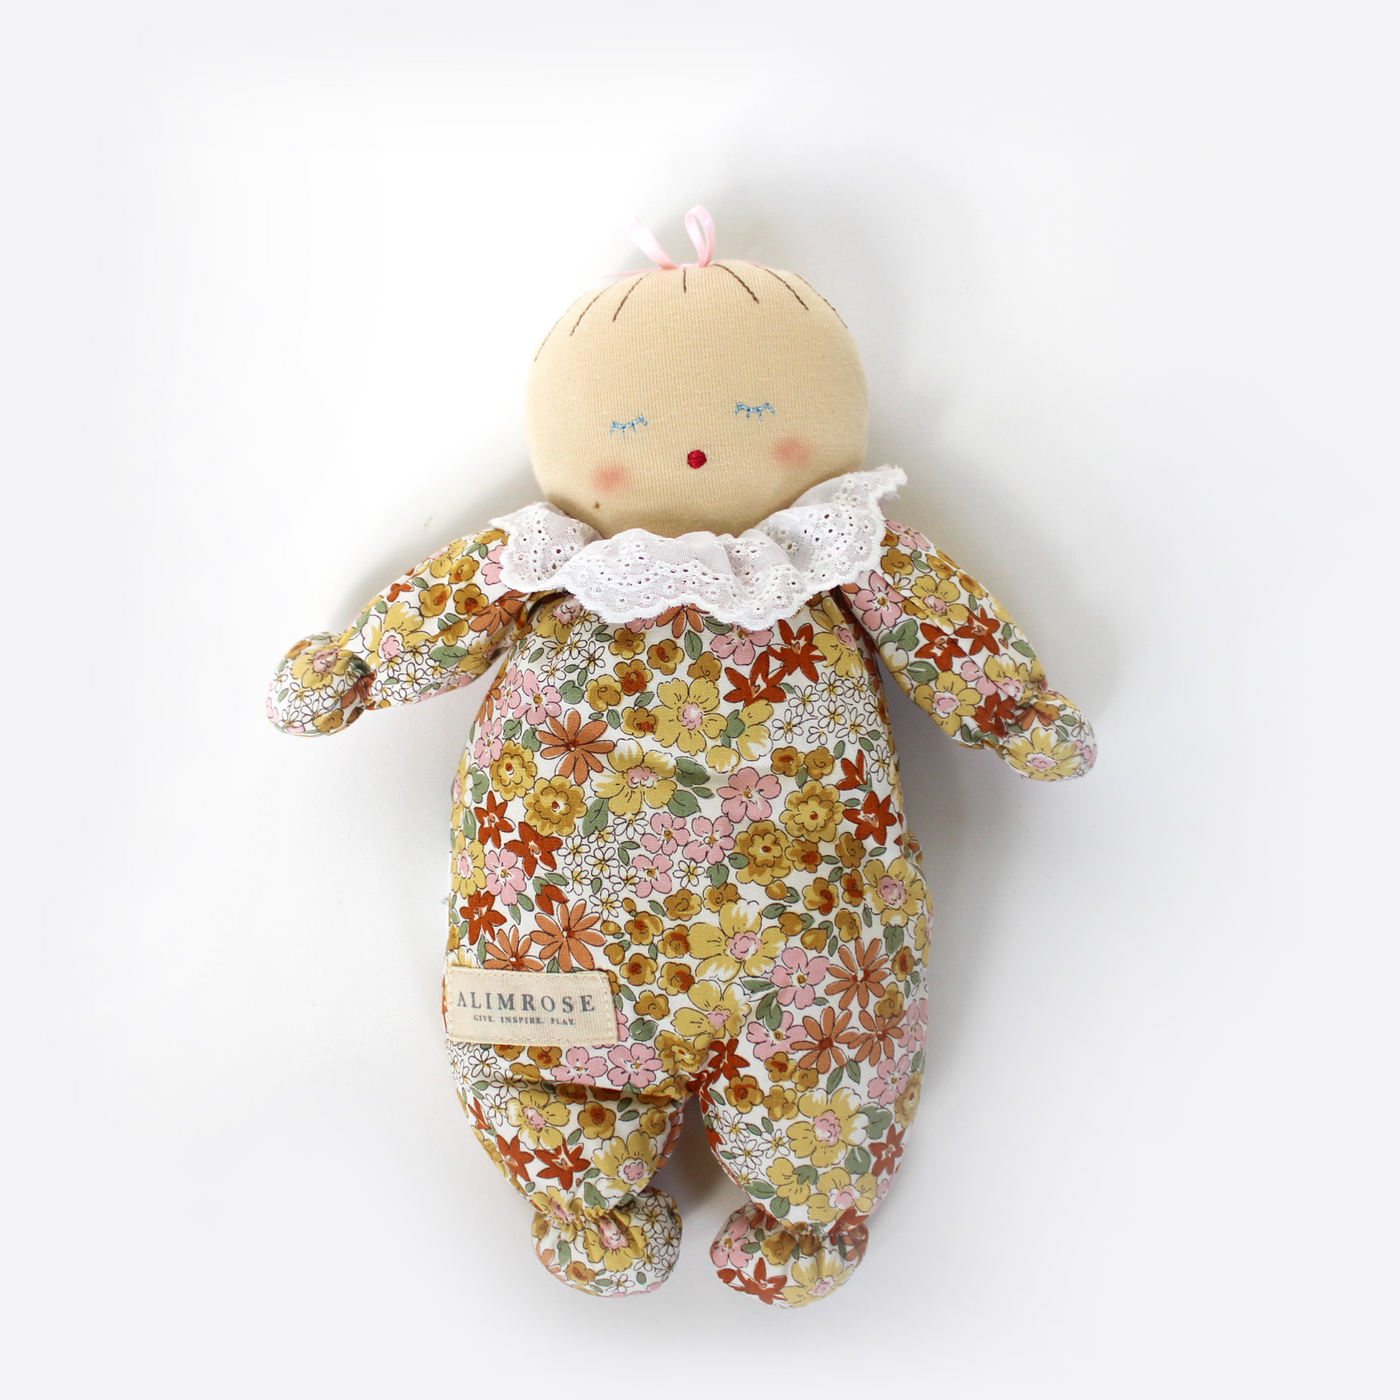 Alim rose marigold baby doll